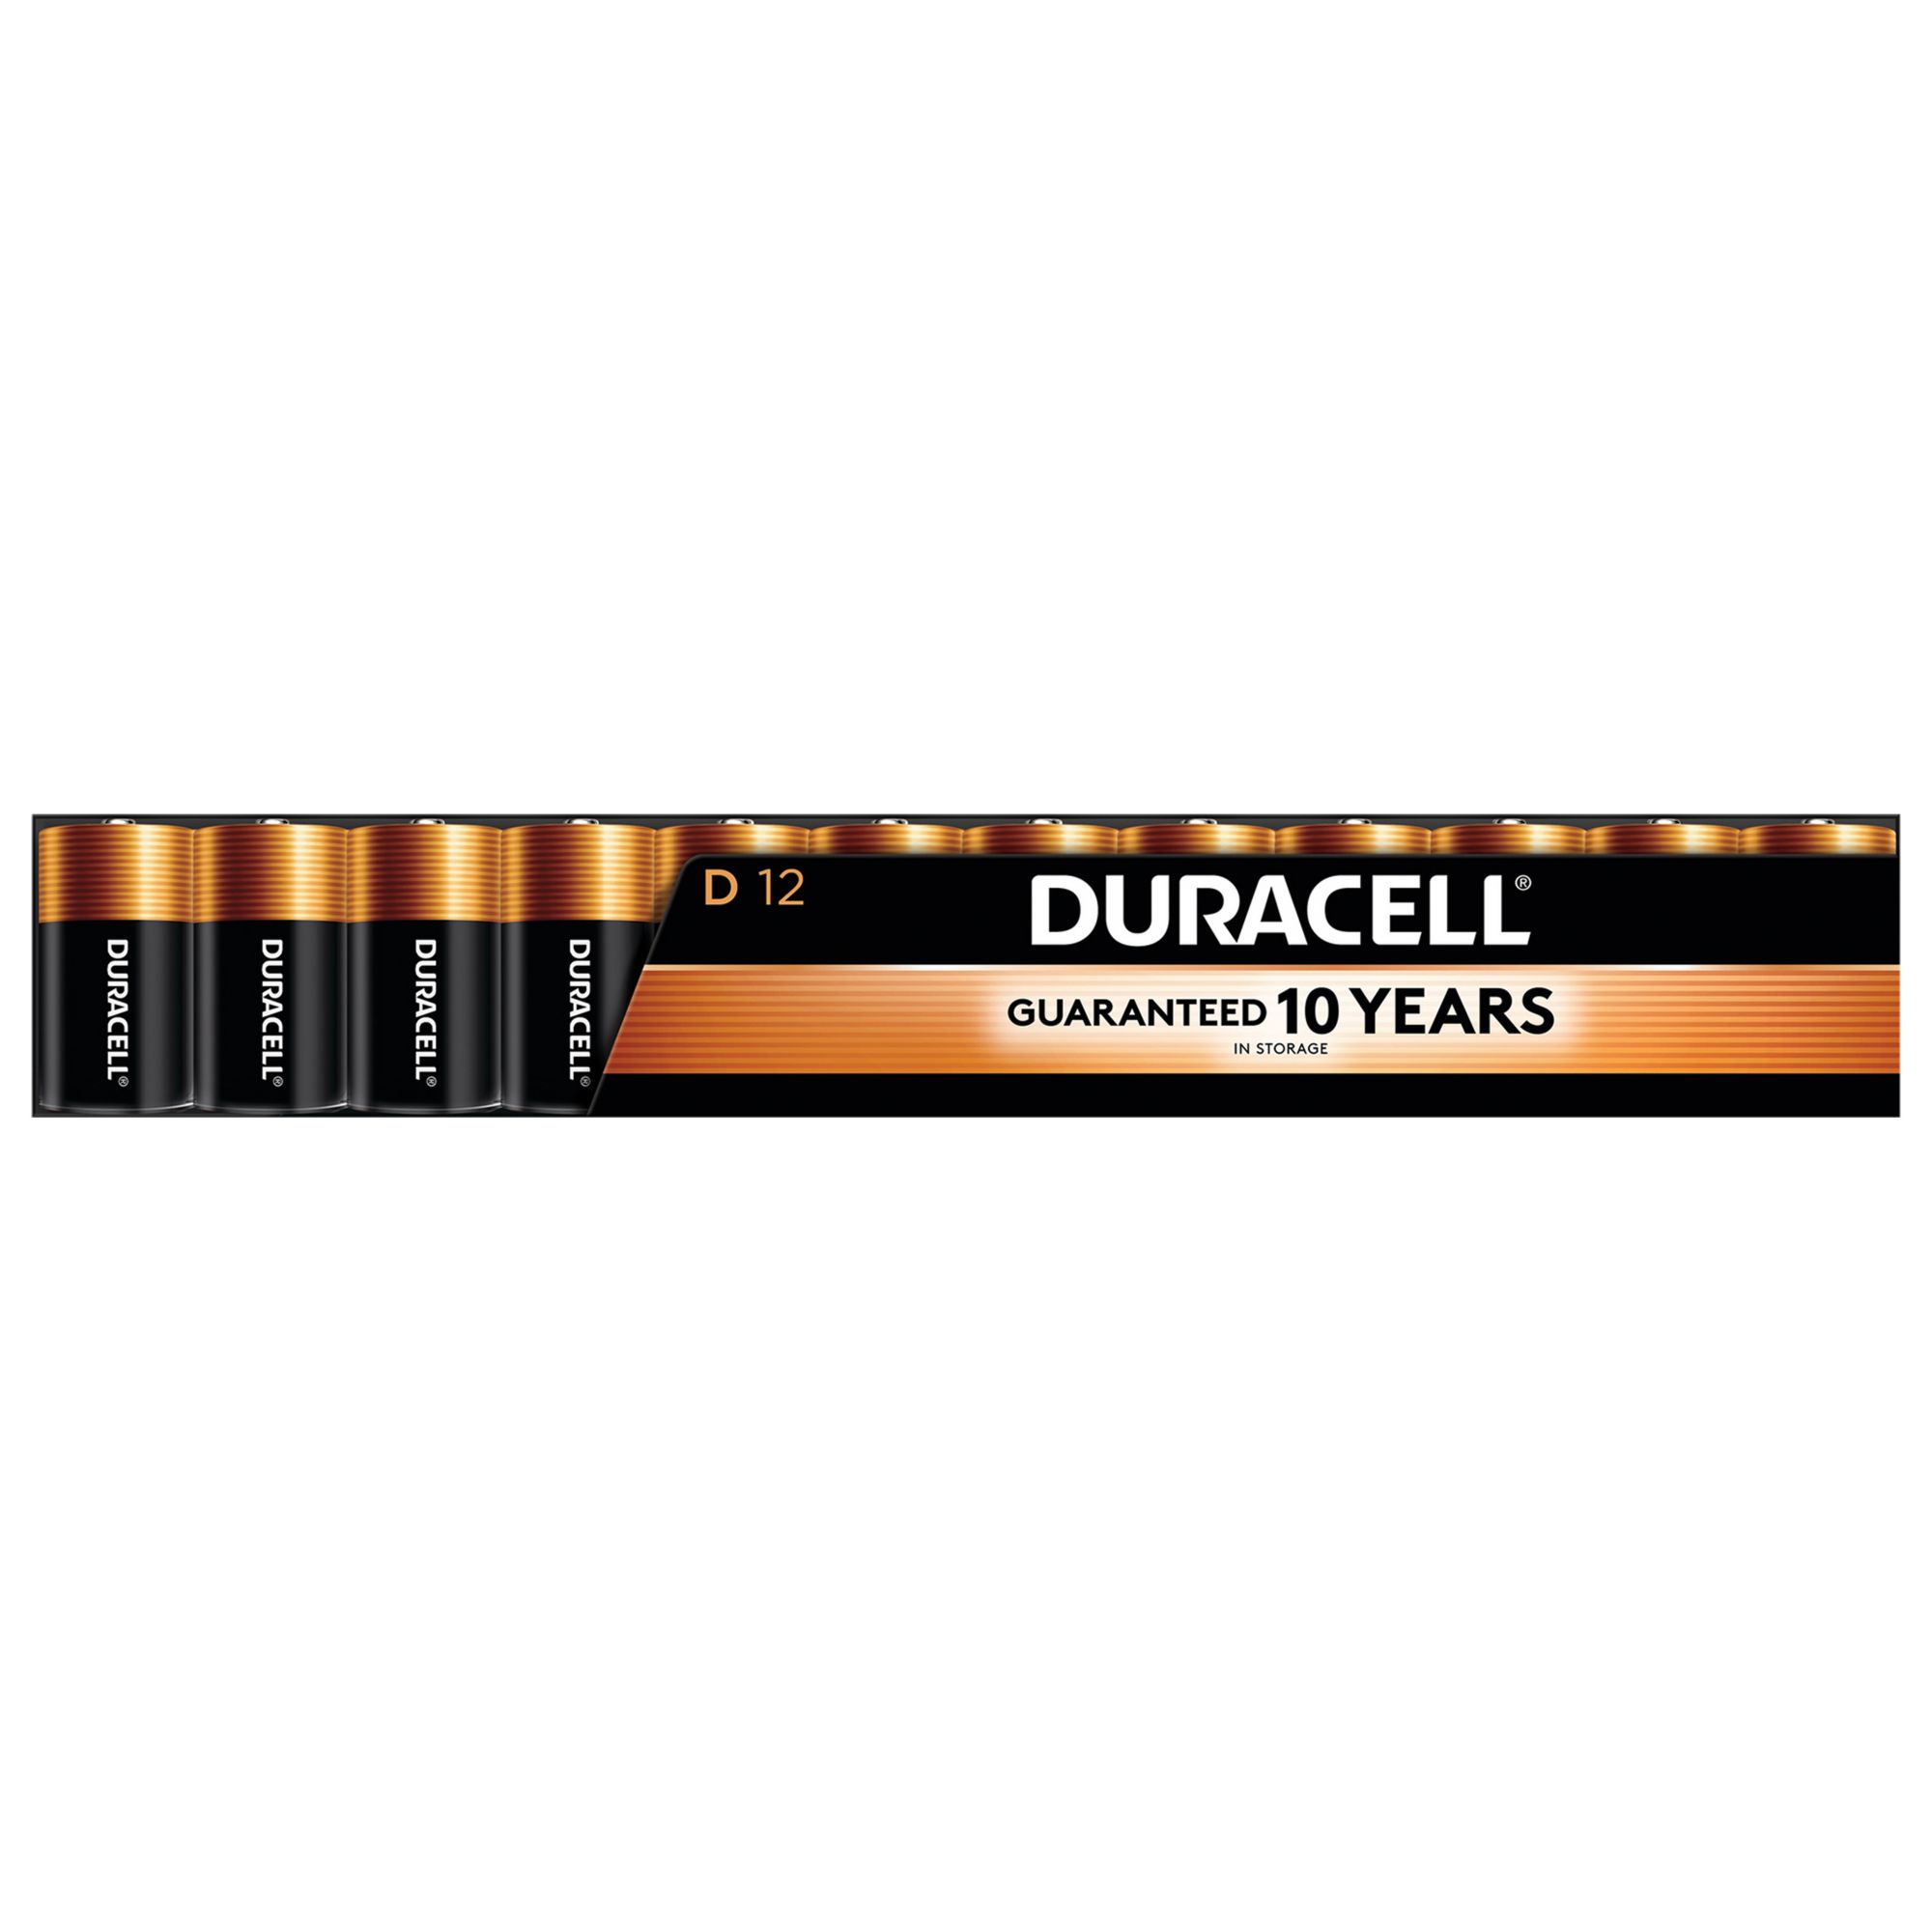  Duracell - CopperTop AA Alkaline Batteries - Long